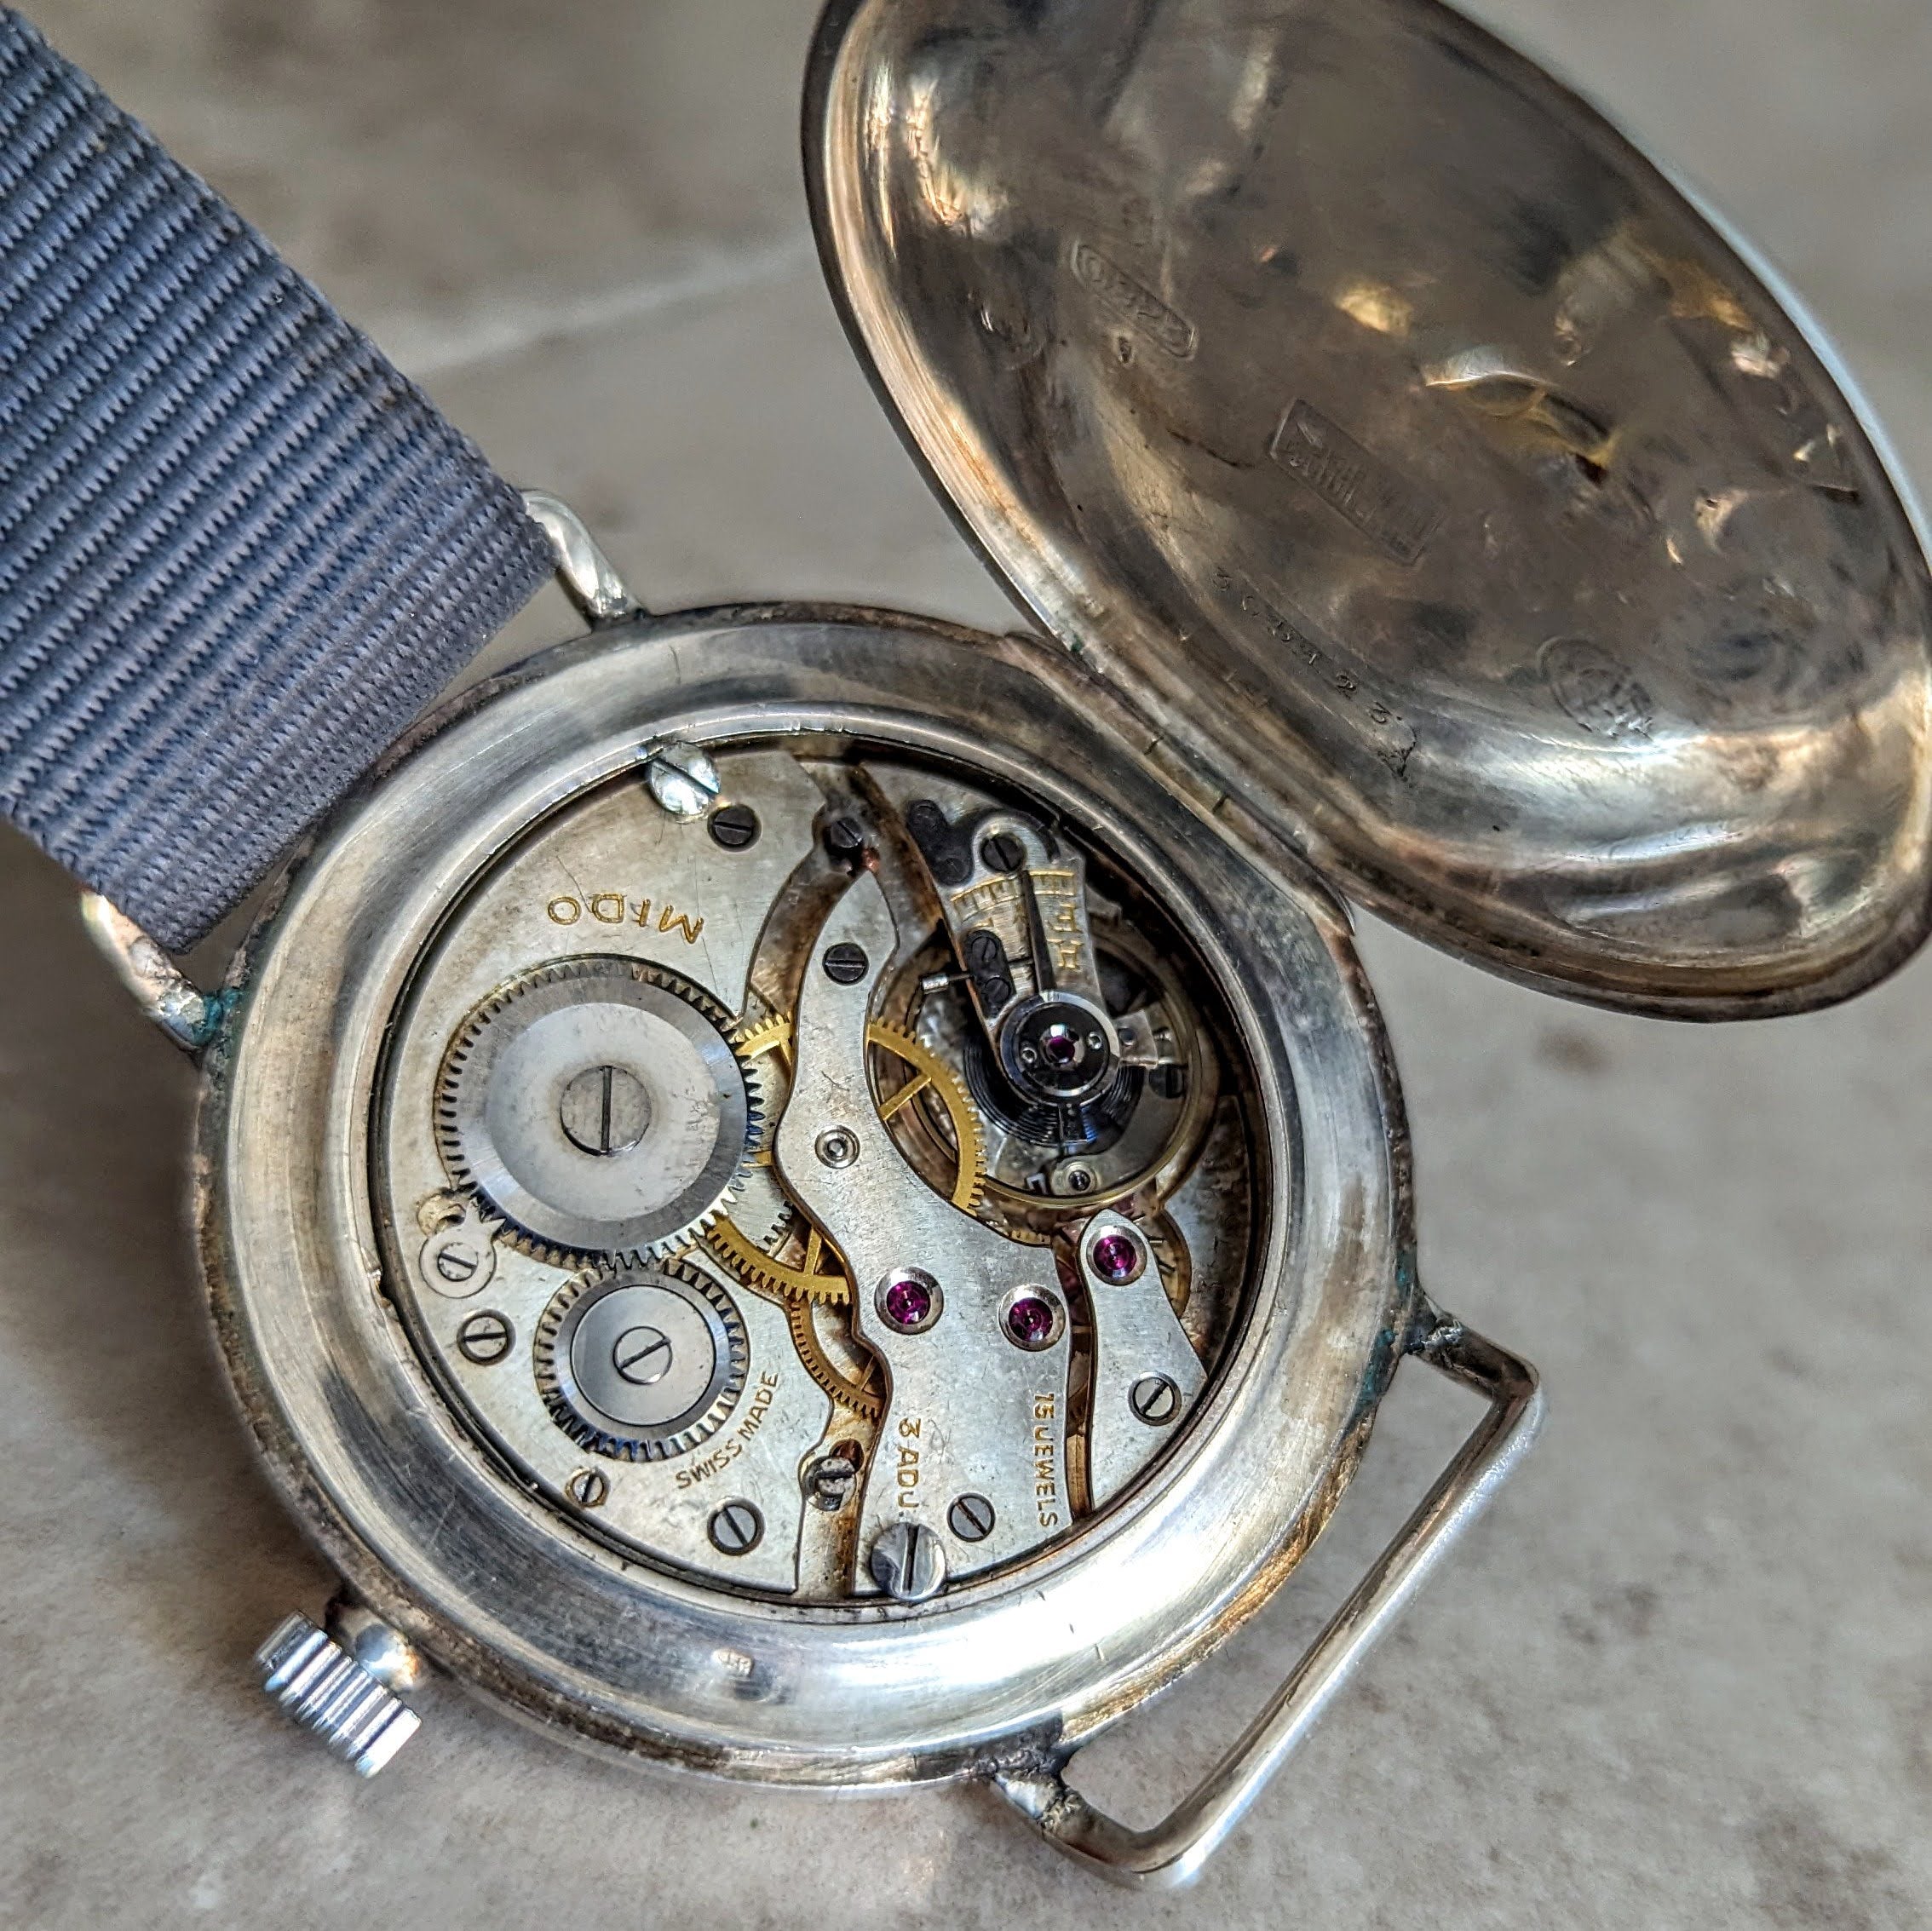 1930s MIDO Conversion WRISTWATCH 15 Jewels Cal. Felsa 161 3 ADJ. Swiss Made Vintage Watch